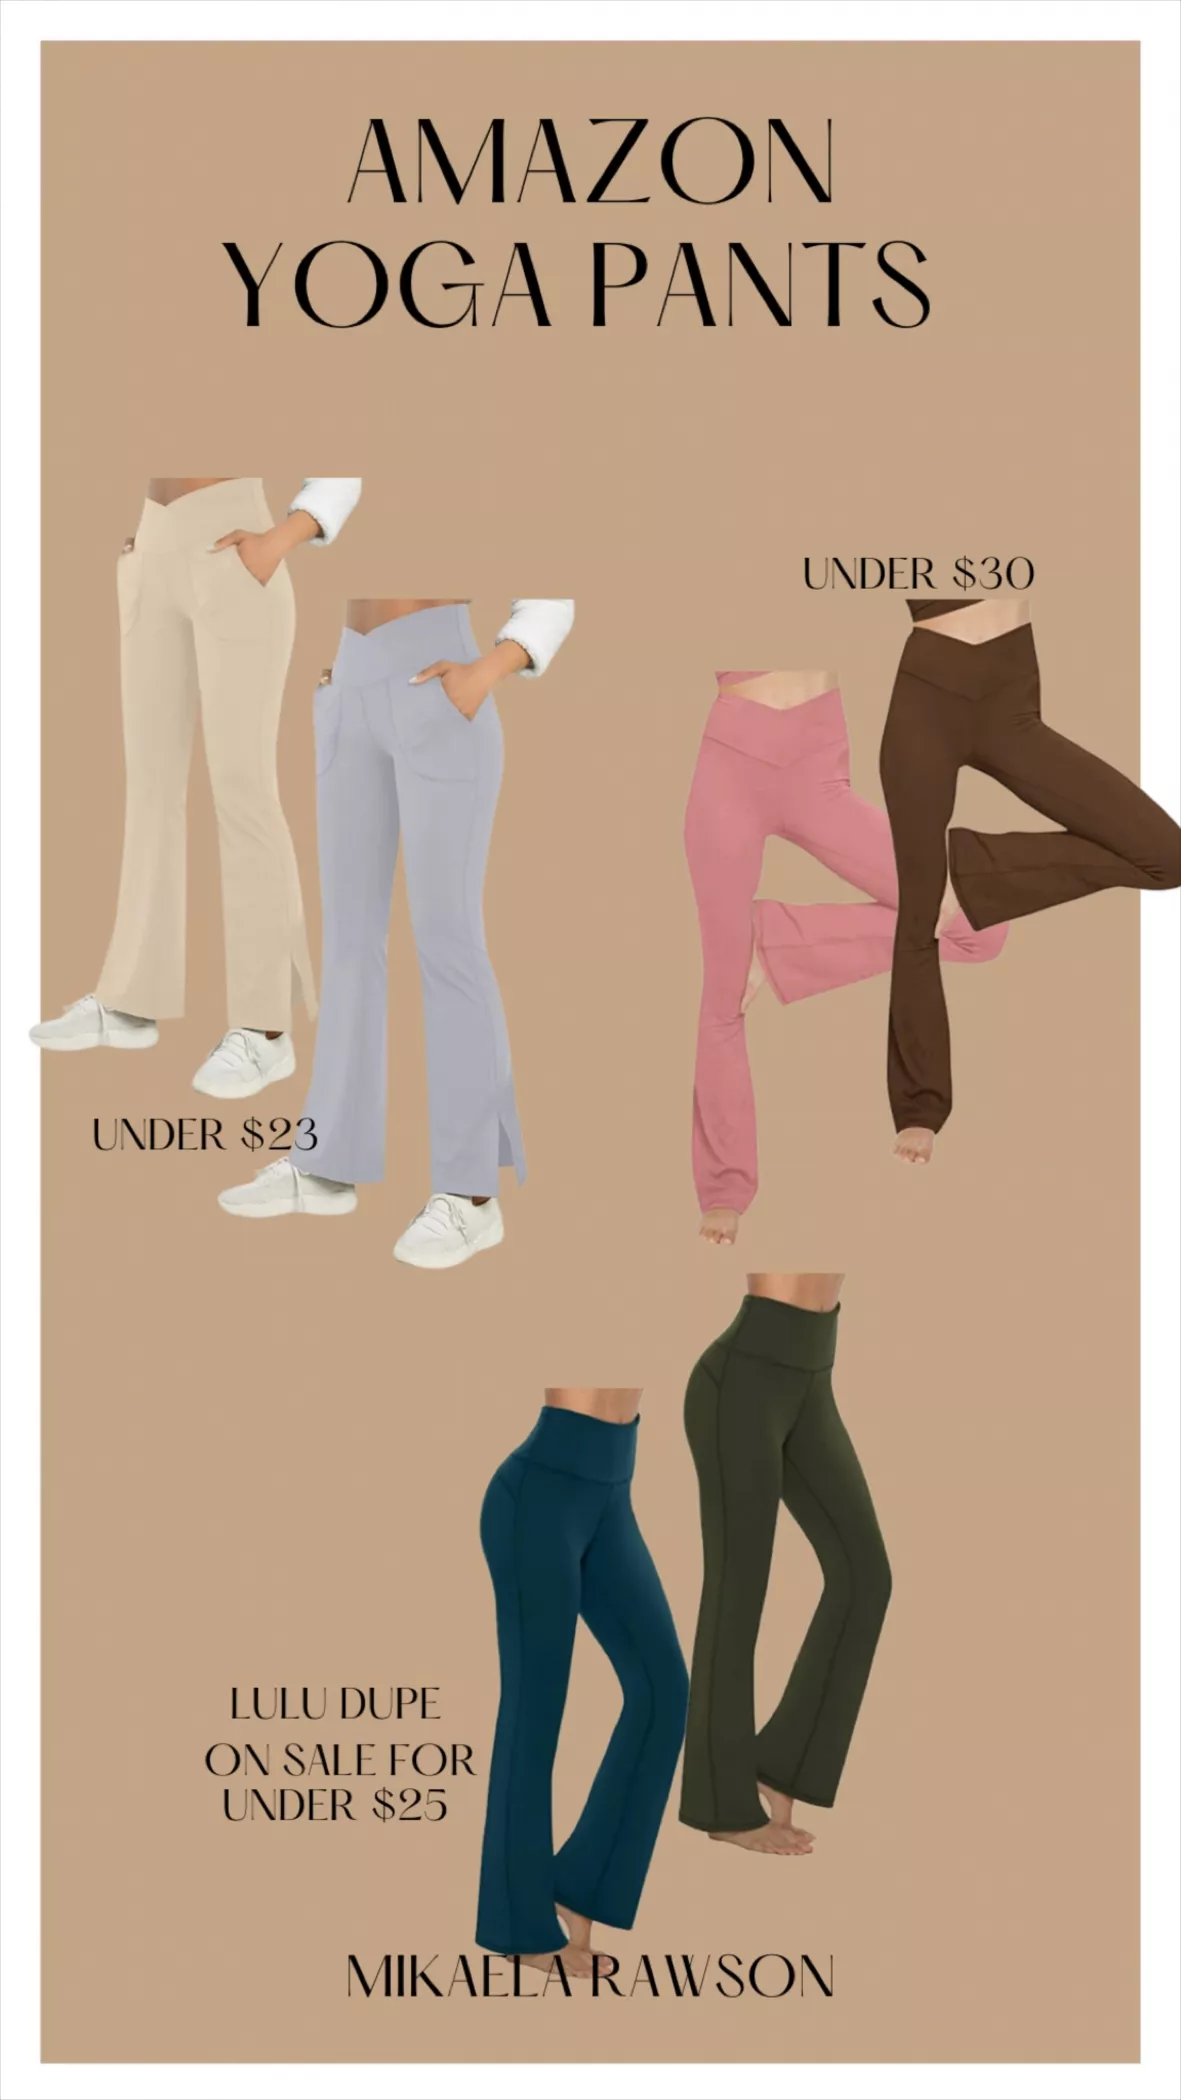 AFITNE Women's Bootcut Yoga Pants with Pockets, High Waist Workout Bootleg  Yoga